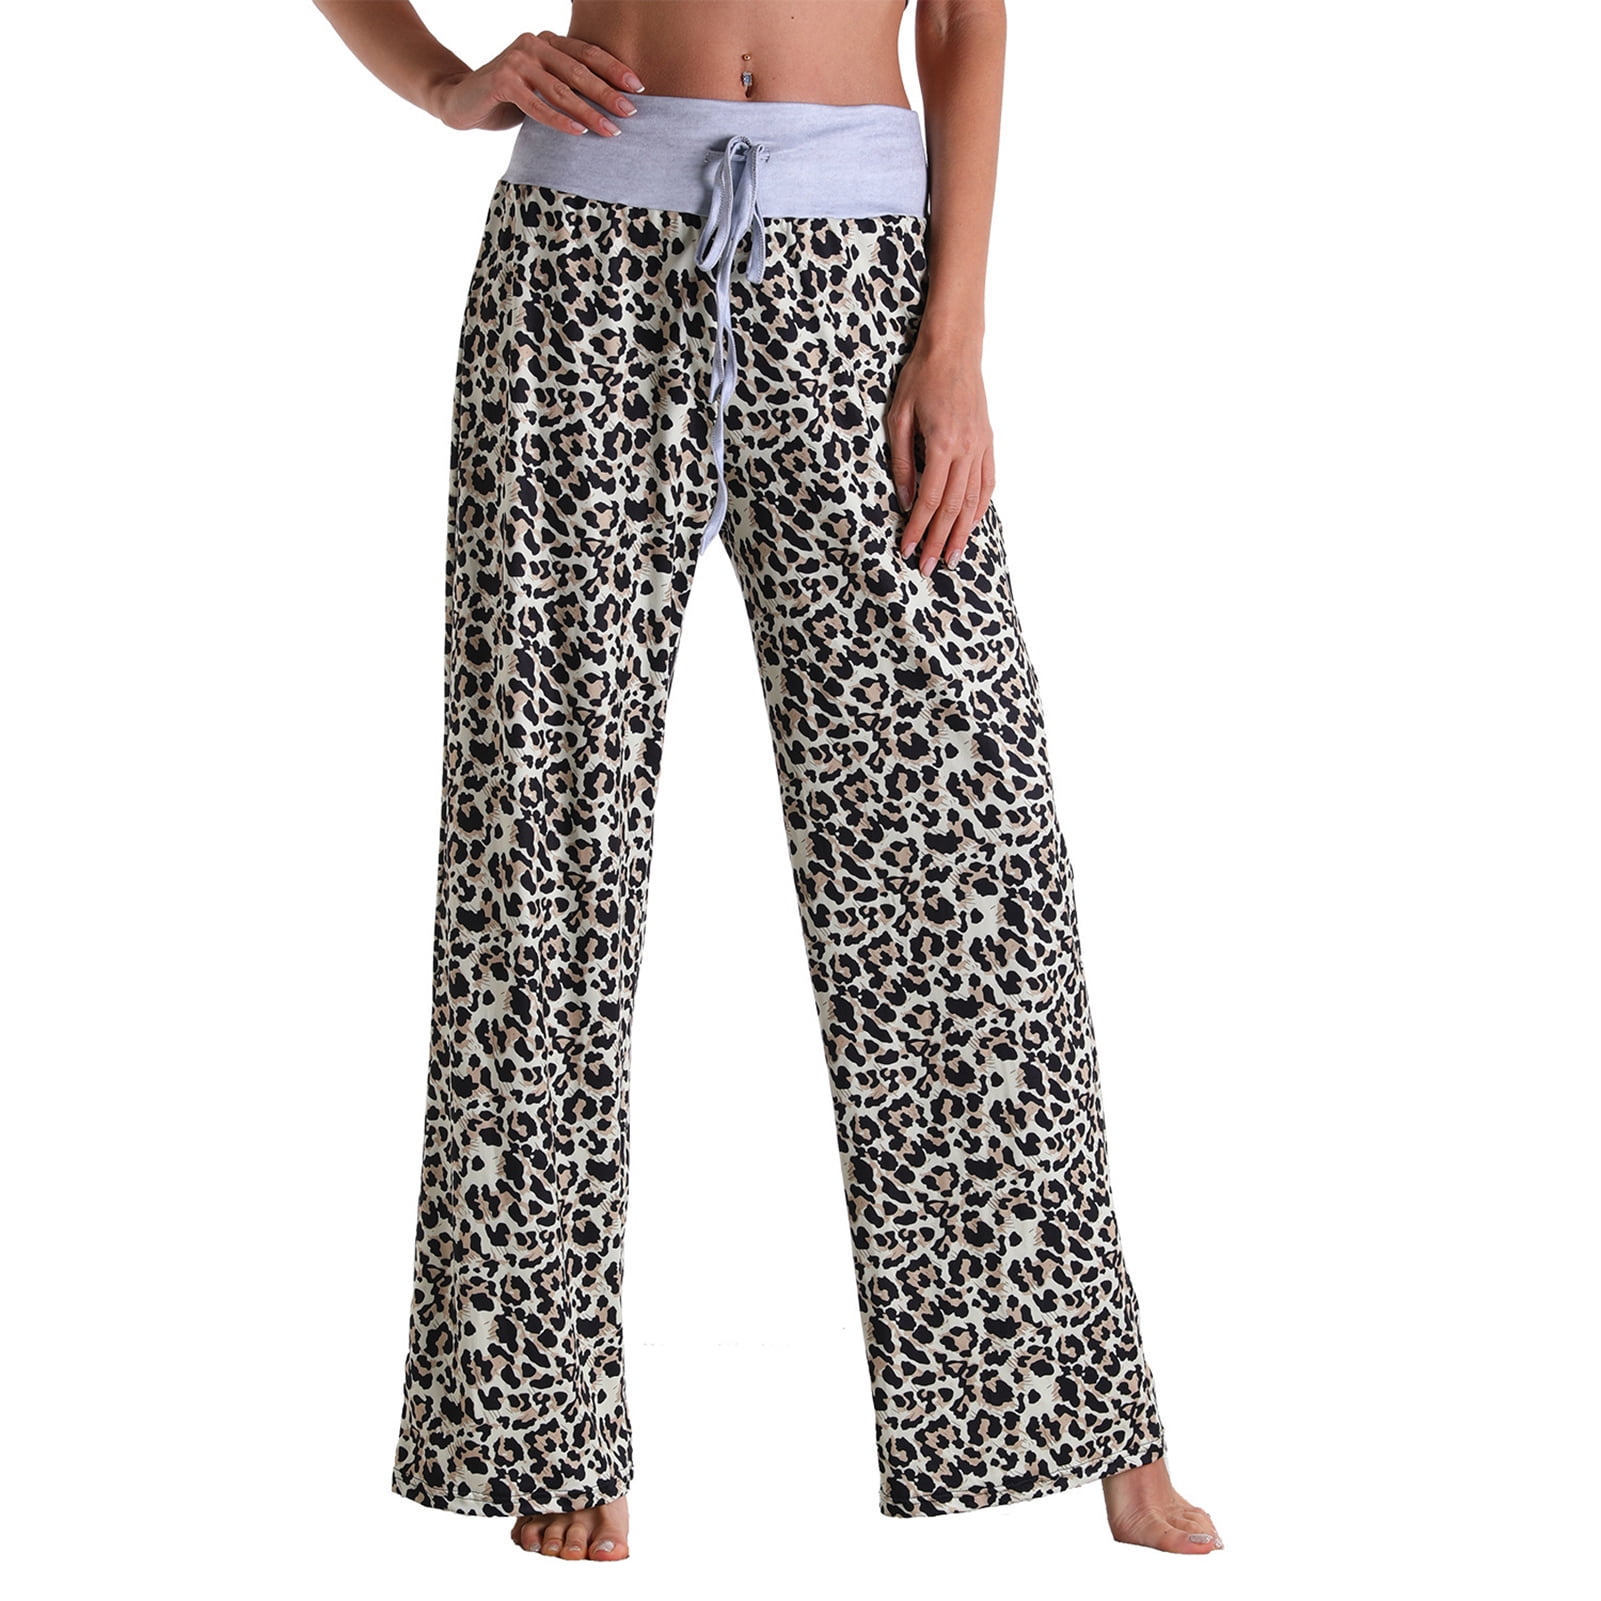 Women's Comfy Casual Pajama Pants Floral Print Drawstring Palazzo Lounge  Pants Wide Leg Loose - Walmart.com